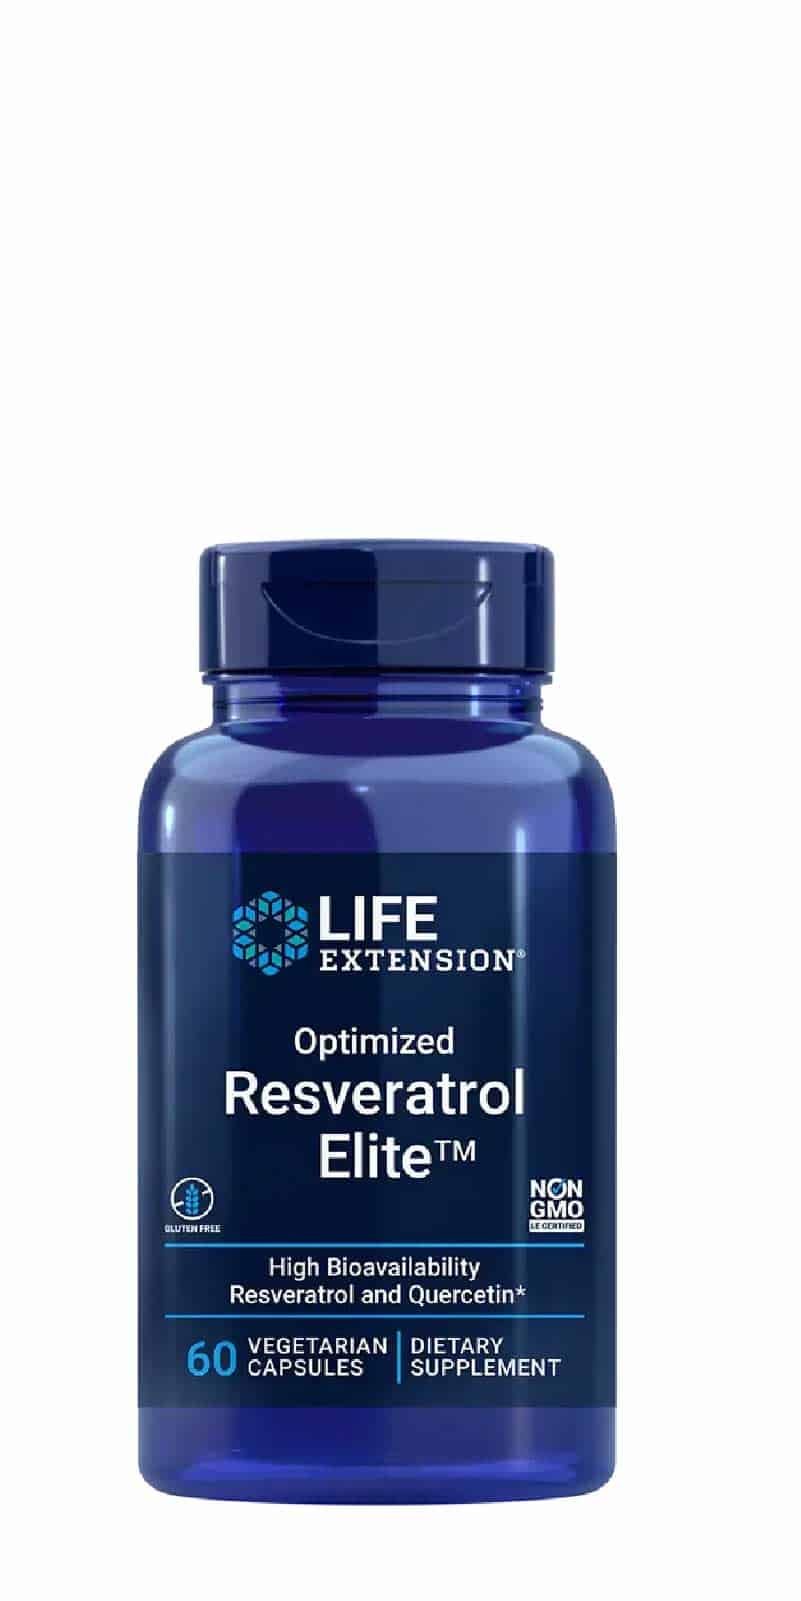 Life Extension Optimized Resveratrol bei LiveHelfi kaufen